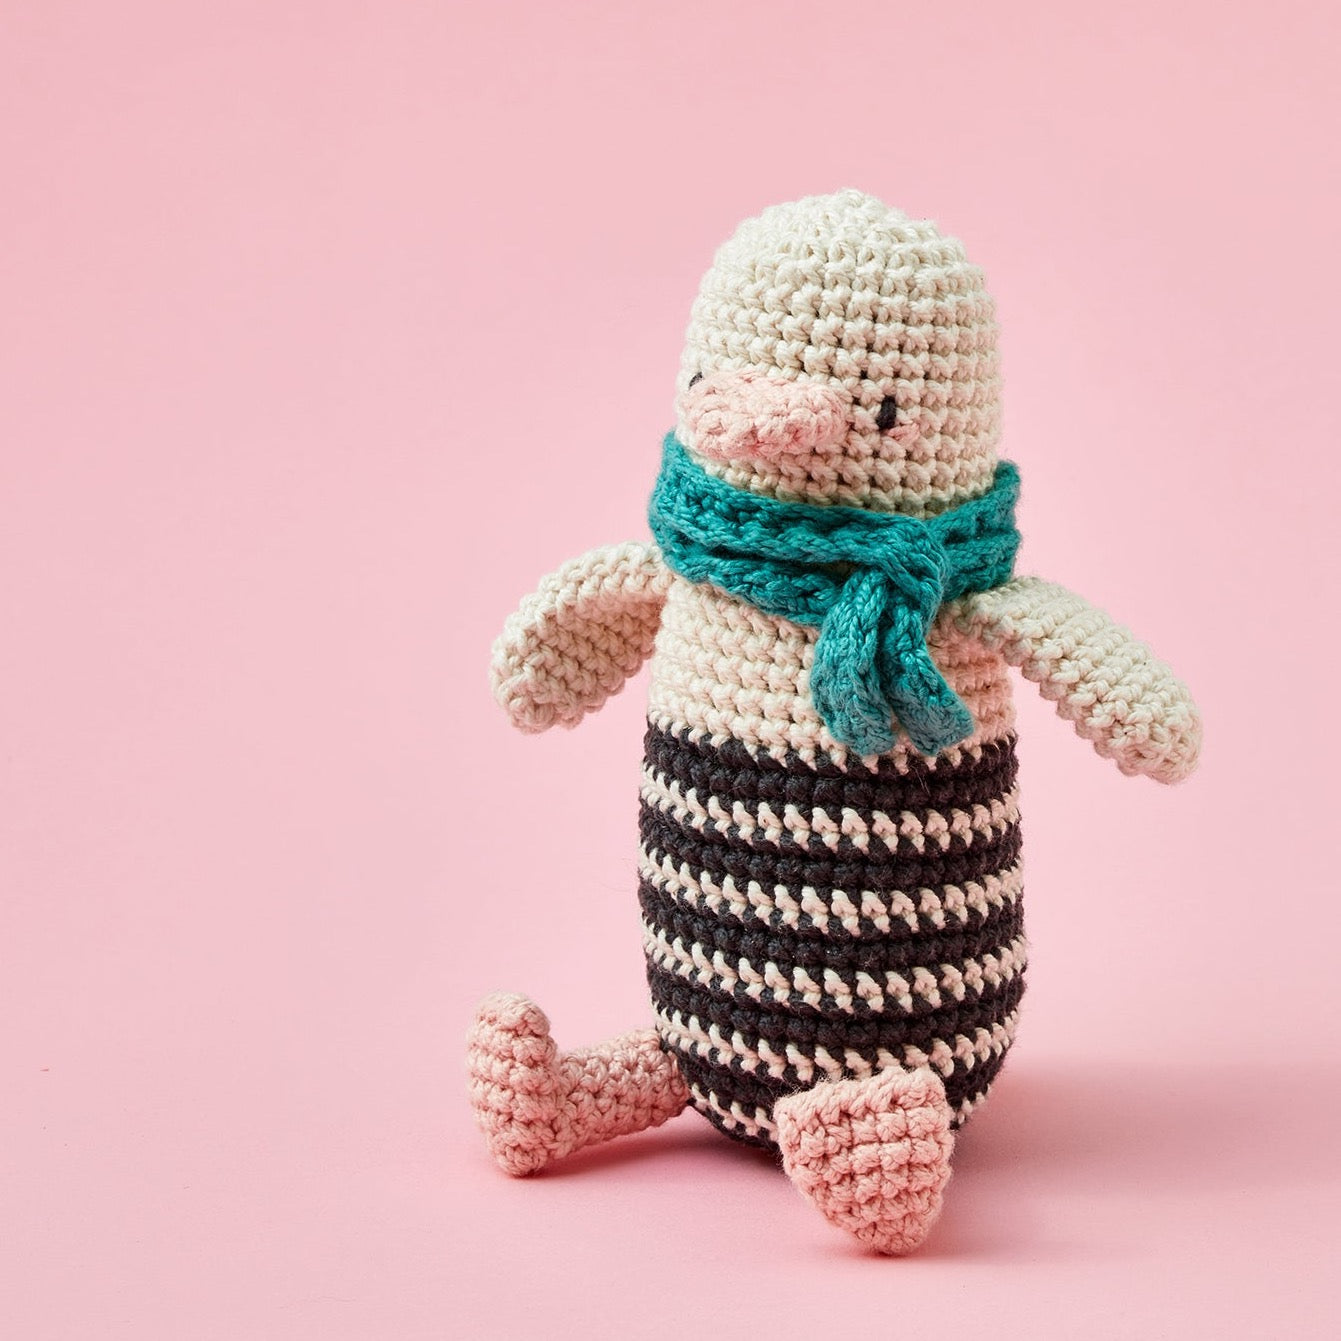 Beginner's Crochet and Amigurumi Class